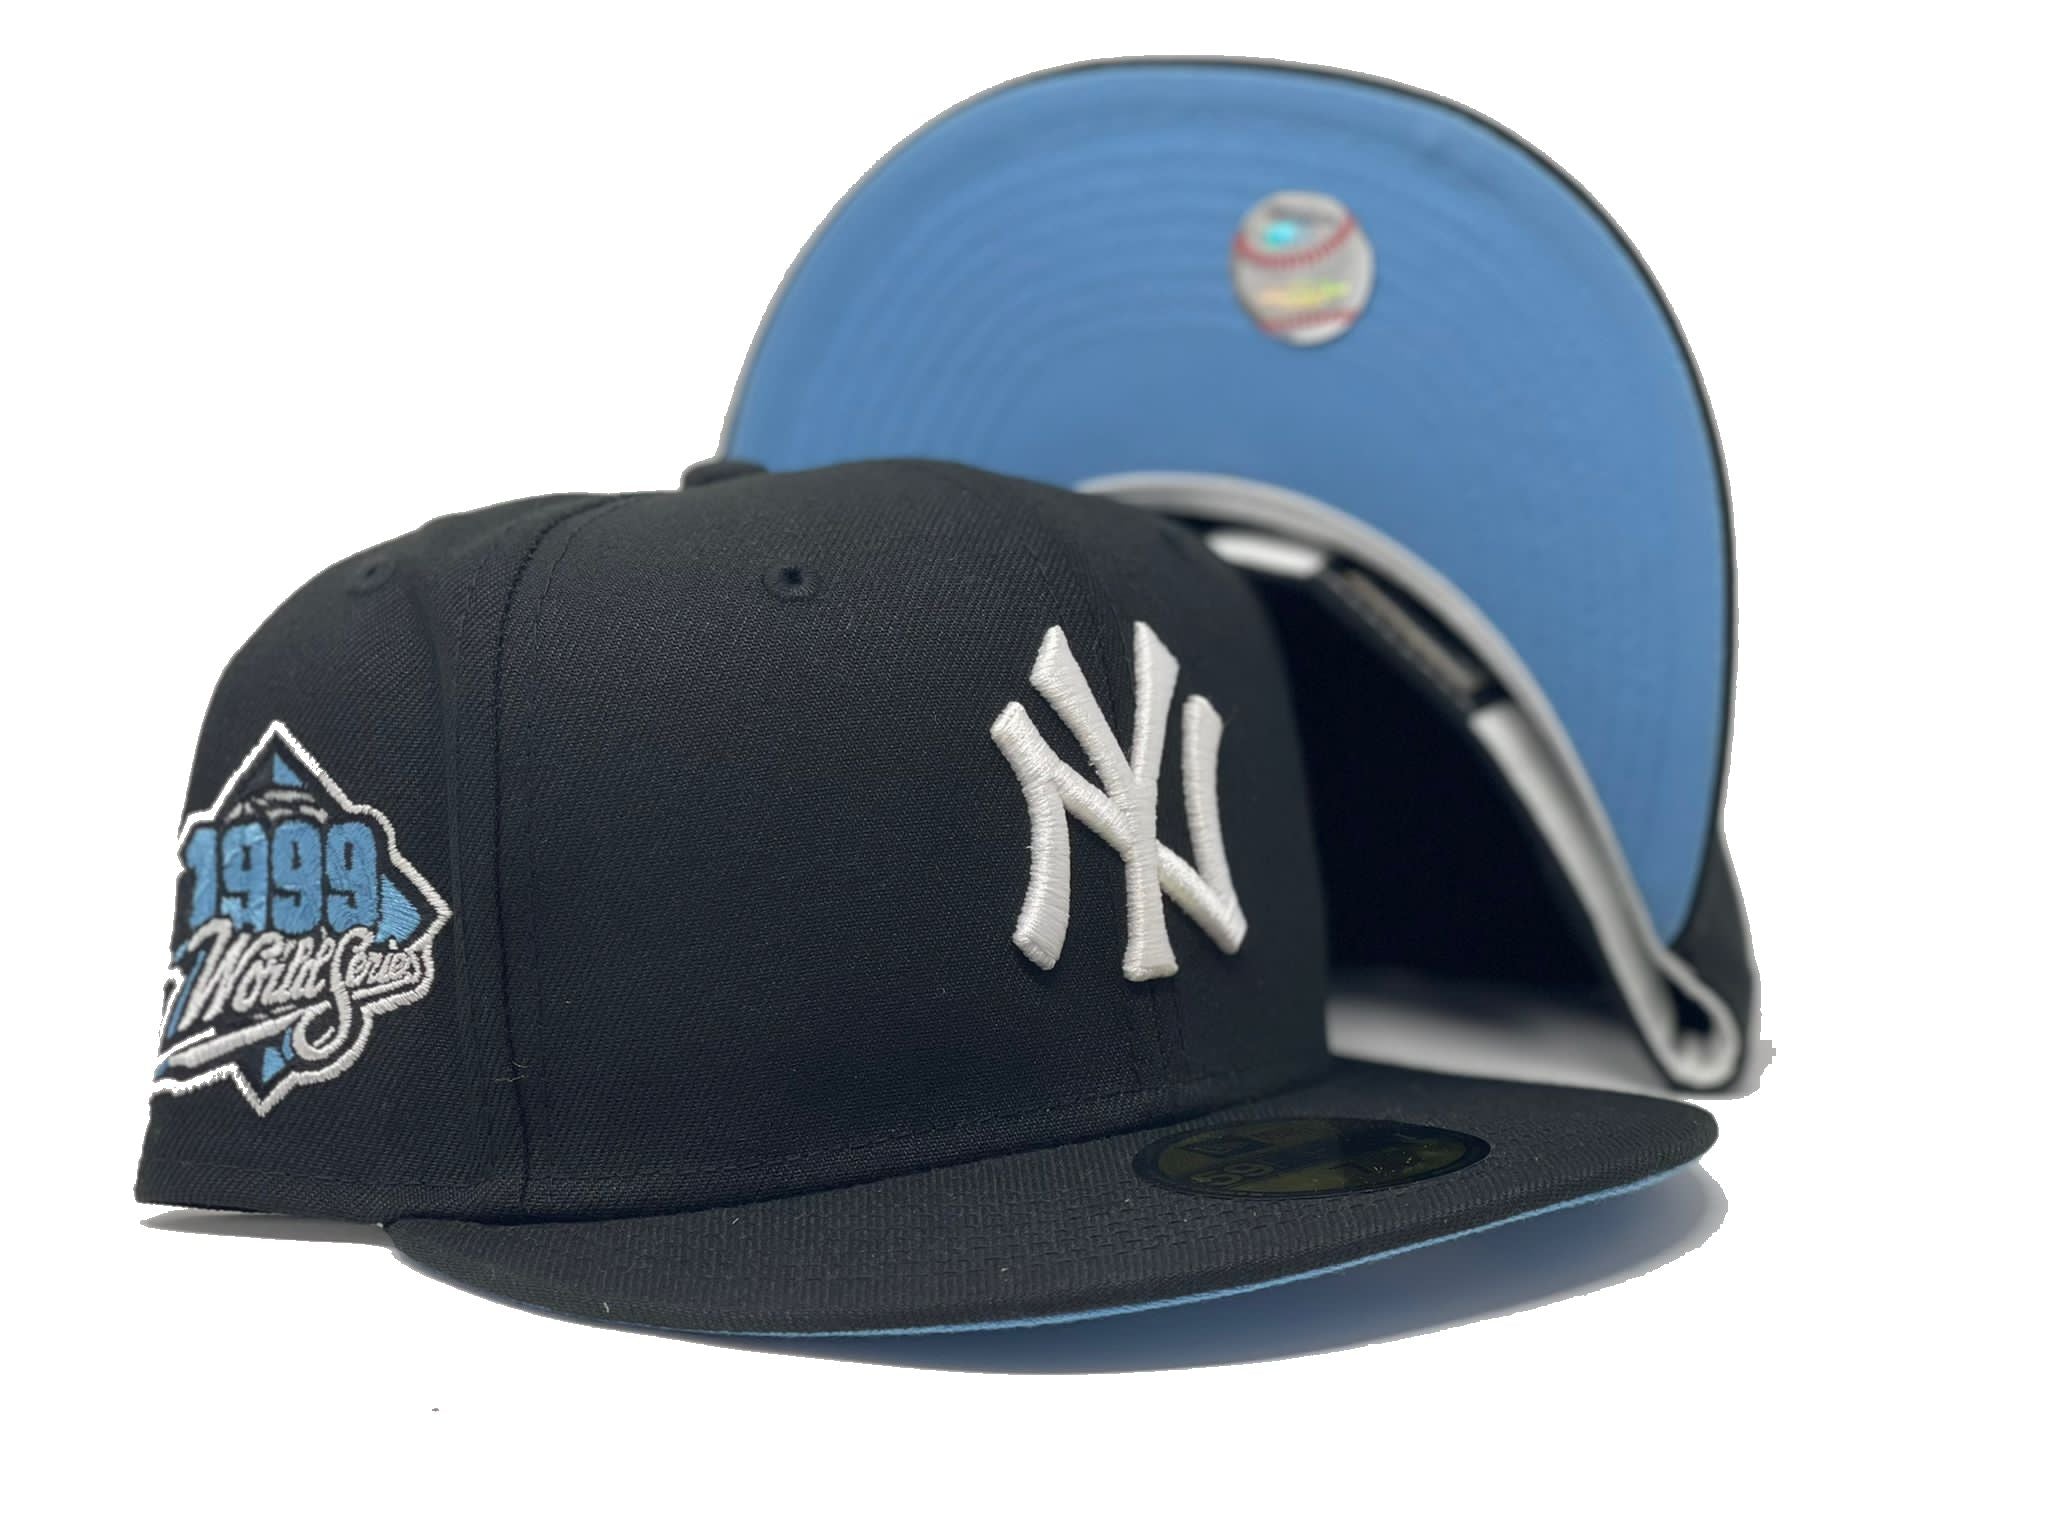 Black New York Yankees 1999 world series New Era Fitted Hat – Sports World  165